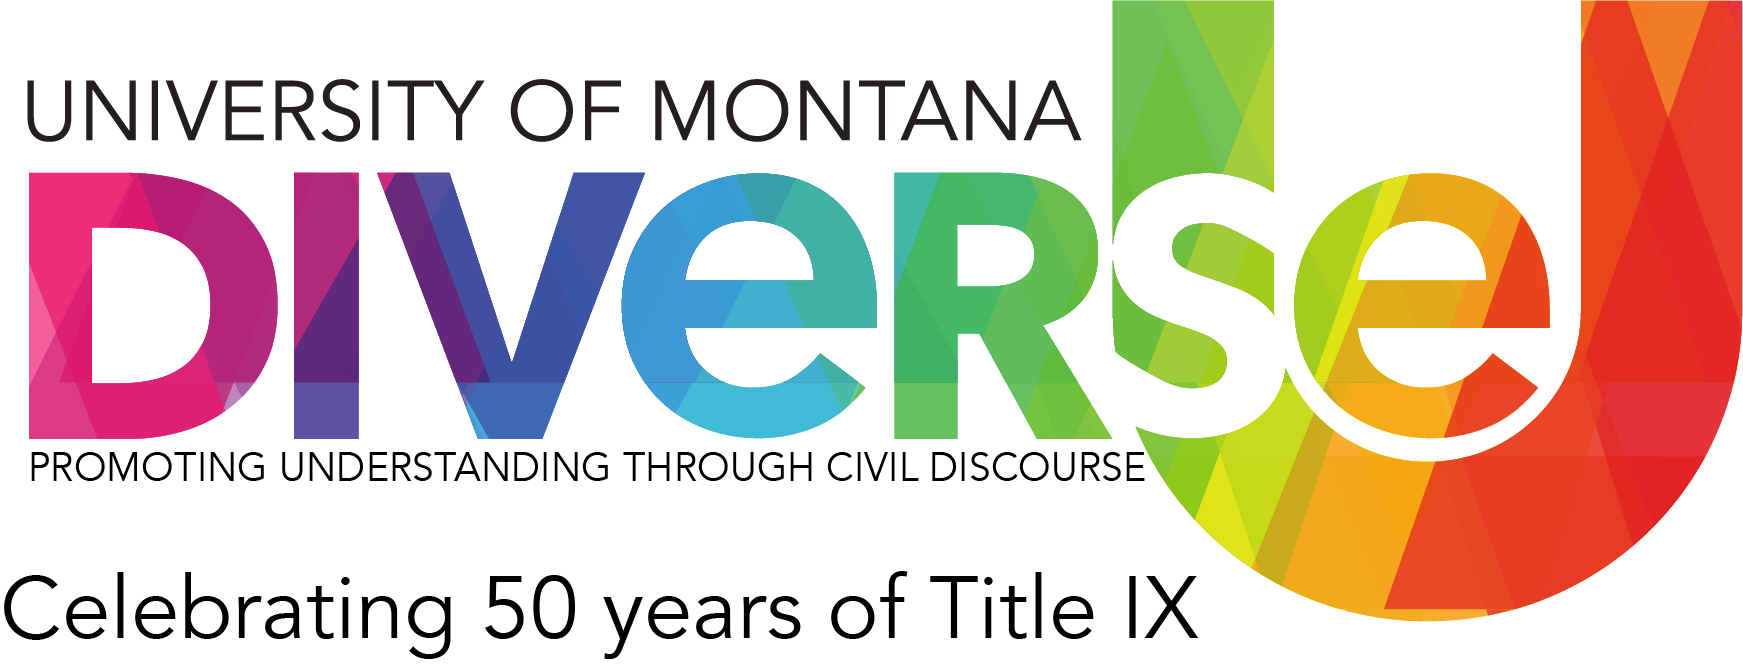 University of Montana DiverseU: Promoting understanding through civil discourse. Speak. Listen. Understand.